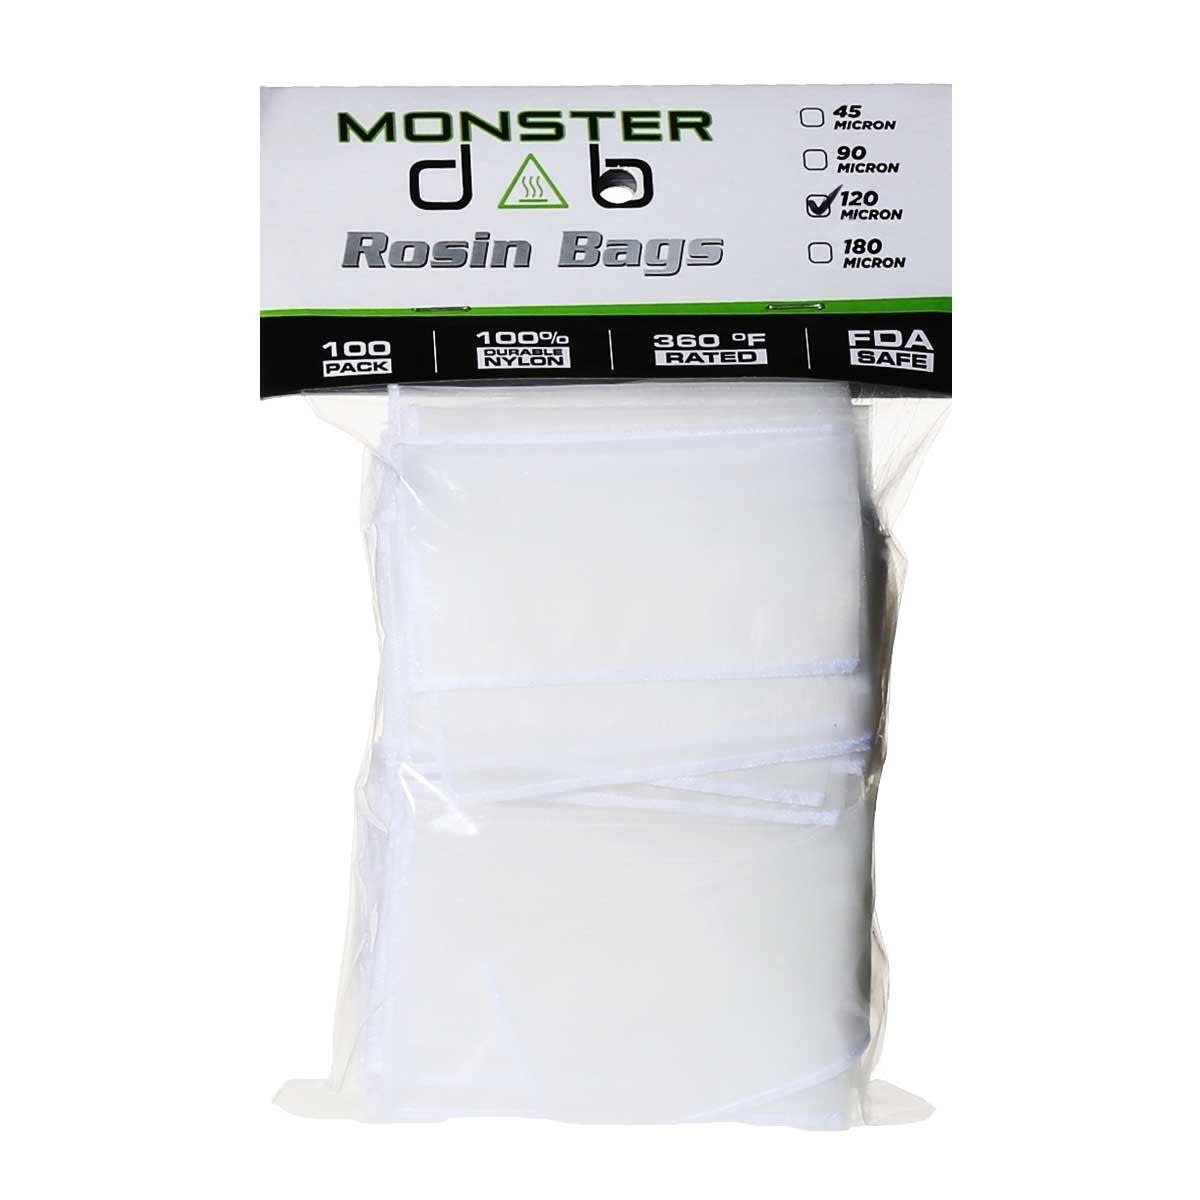 Monster Dab rosin bag 2"x4" 120micron 100pk